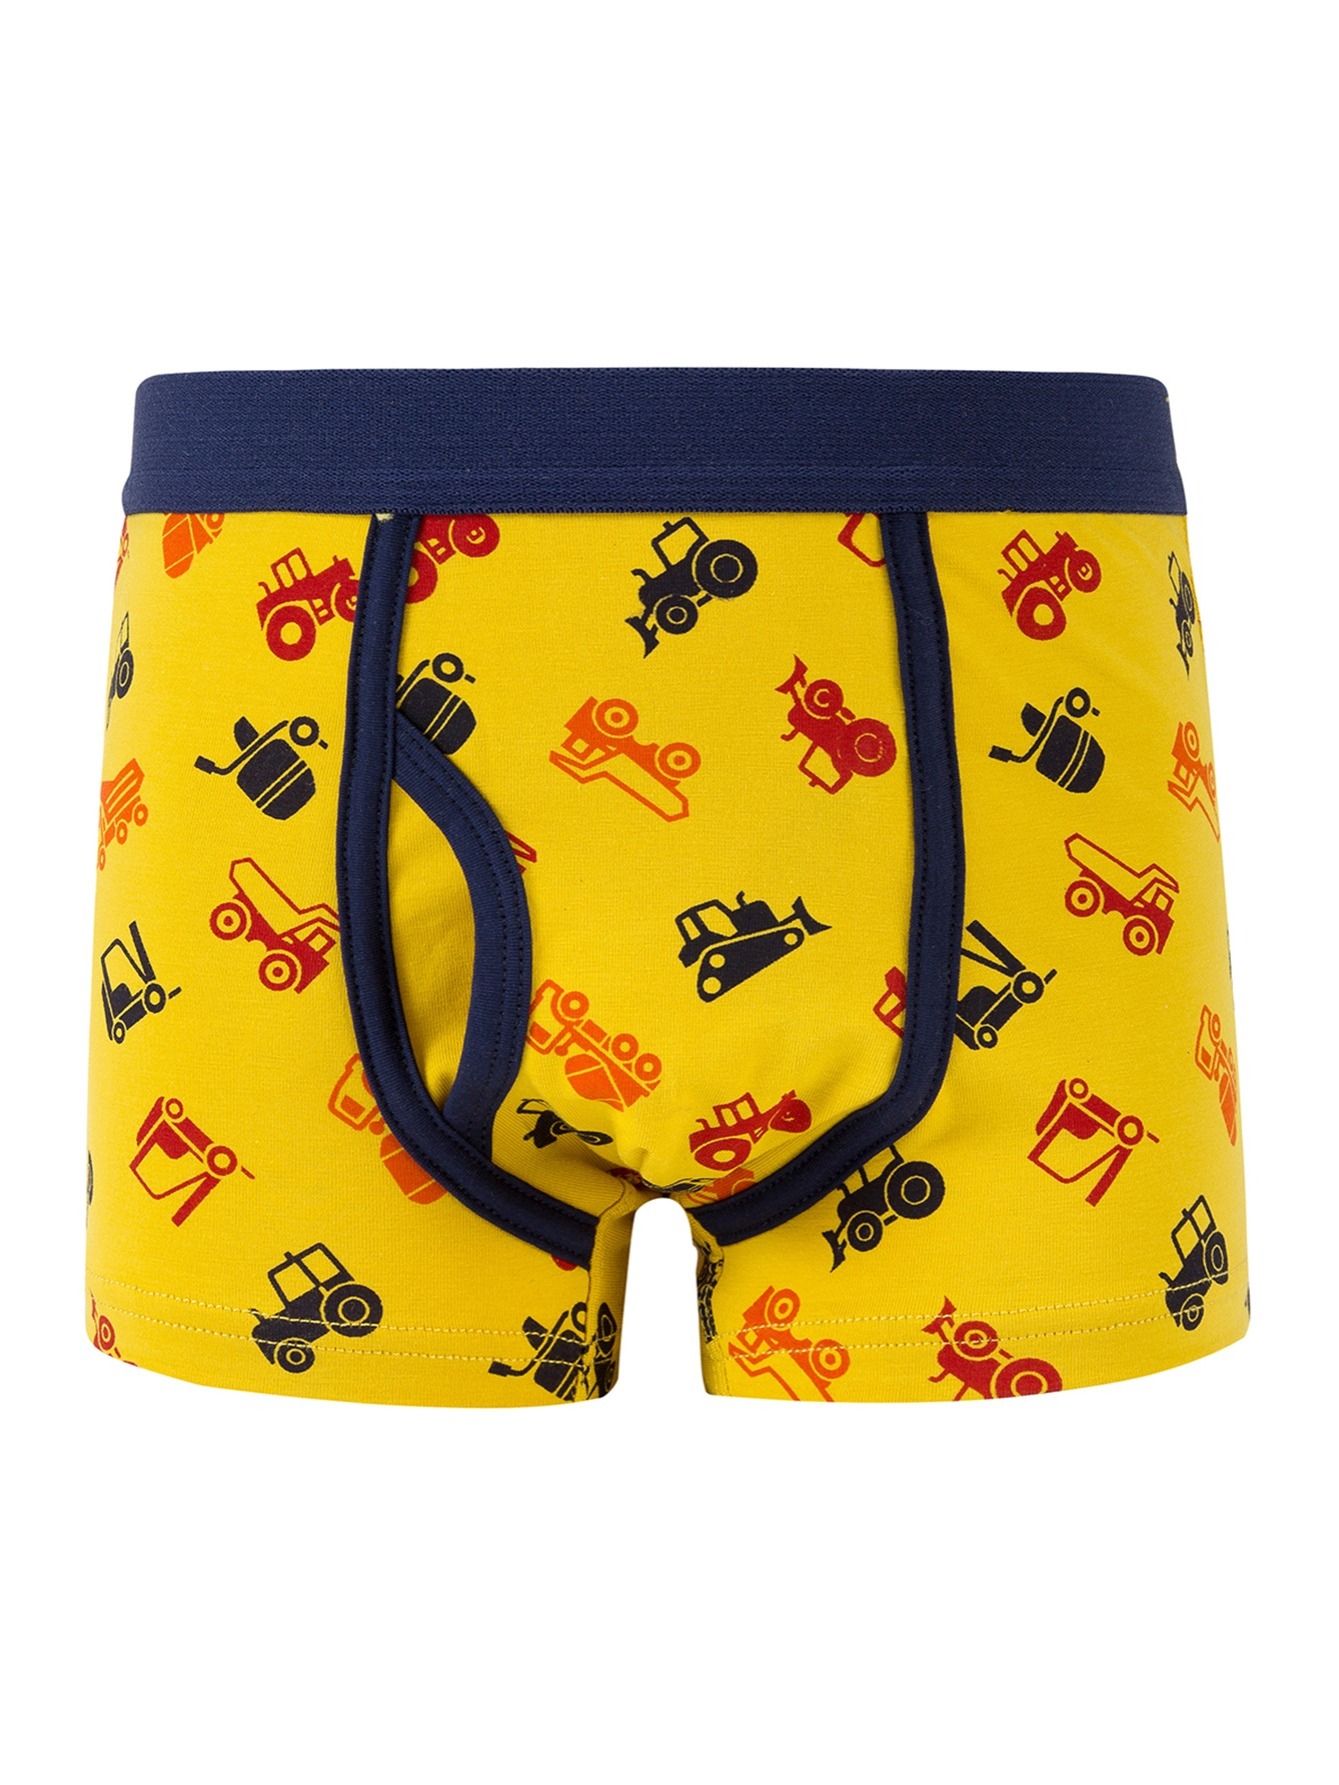  Boys Briefs Dino Boys Soft Toddler Underwear Boys Boxer Briefs  3T Multi Color